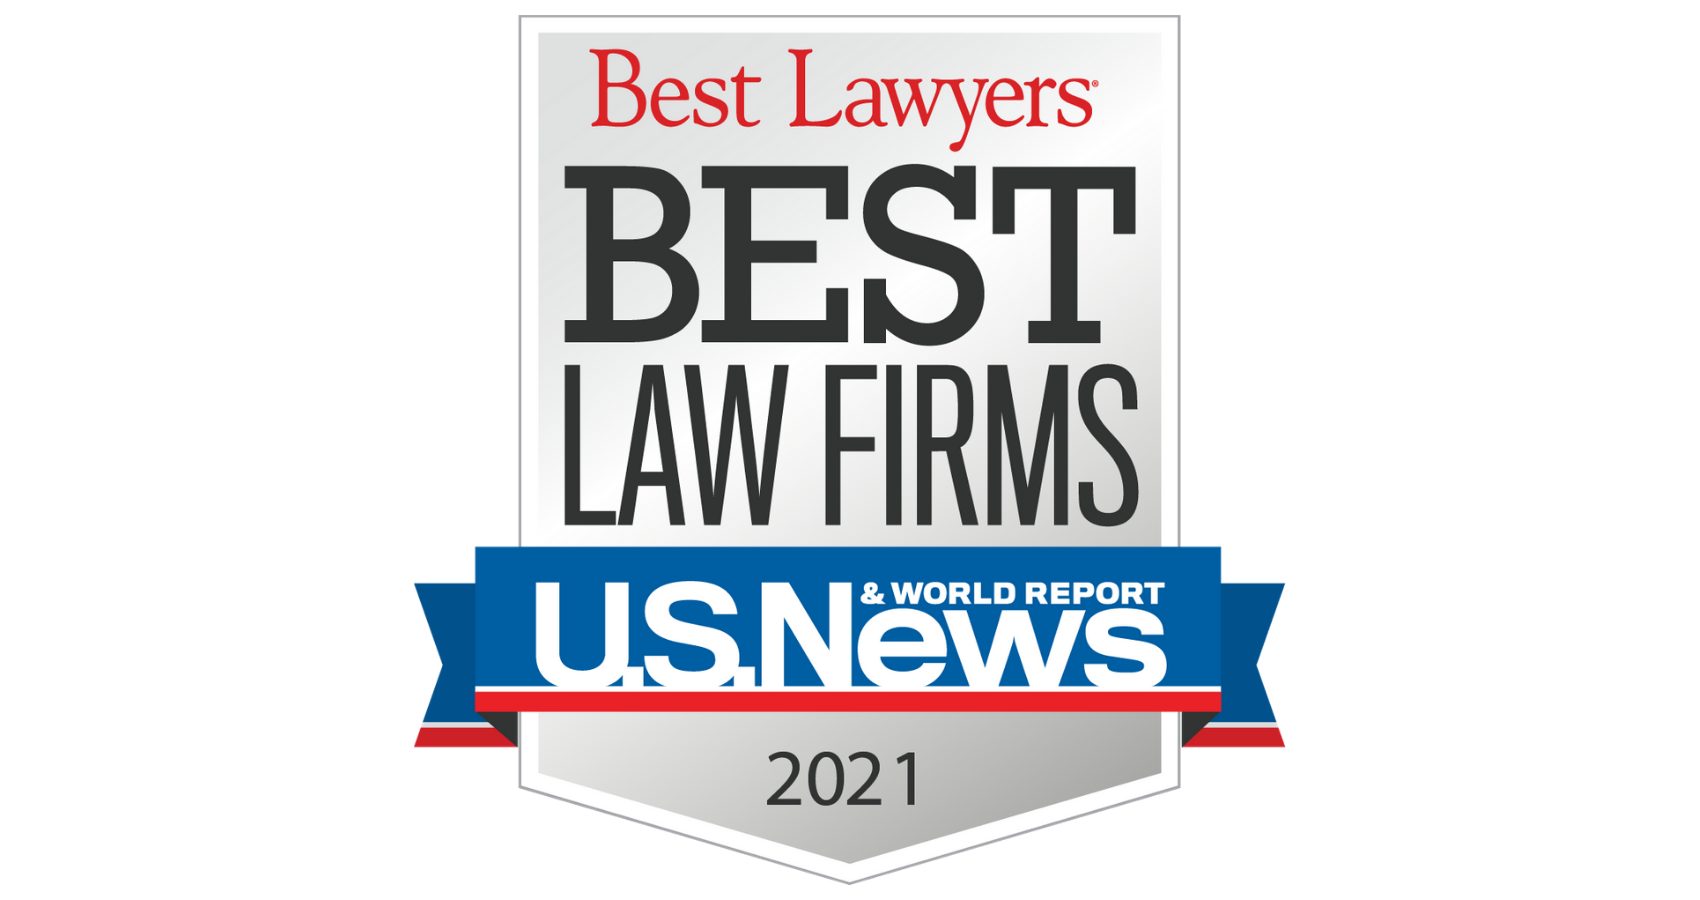 ByrdAdatto Selected as a “Best Law Firm” in U.S. News – Best Lawyers® 2021 Rankings